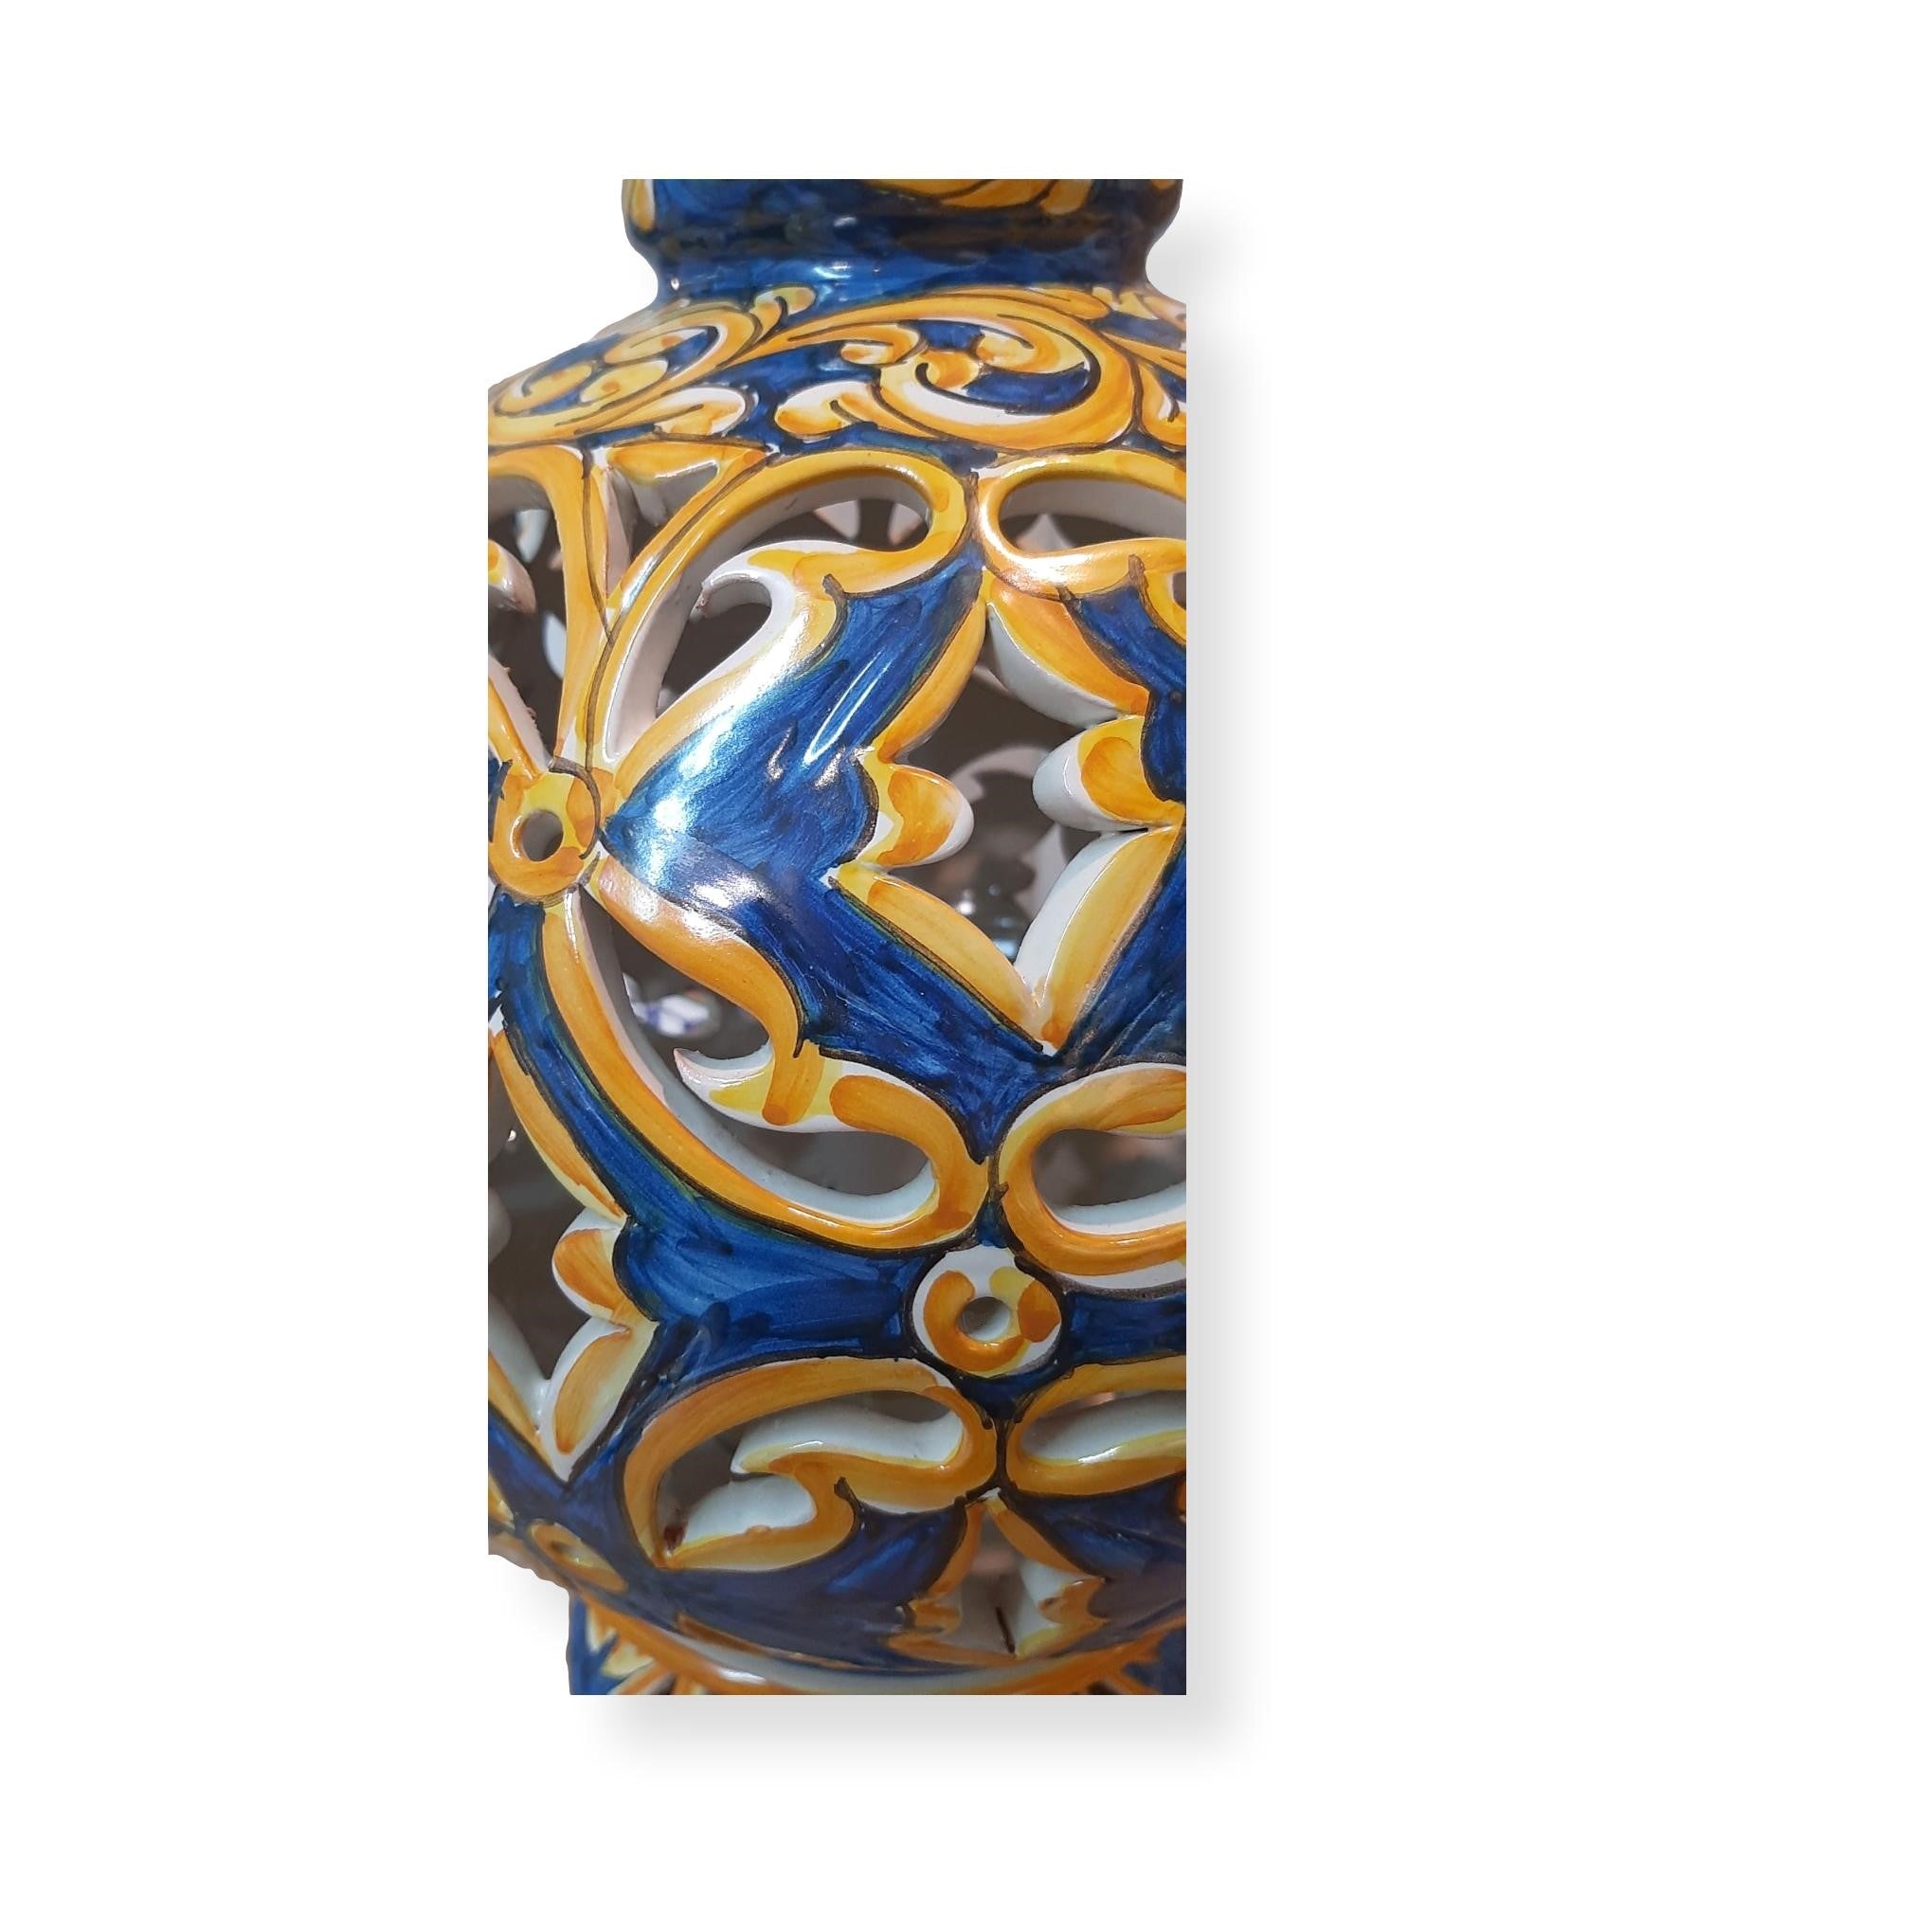 Lampada in ceramica dipinta a mano traforata - Blu con giallo